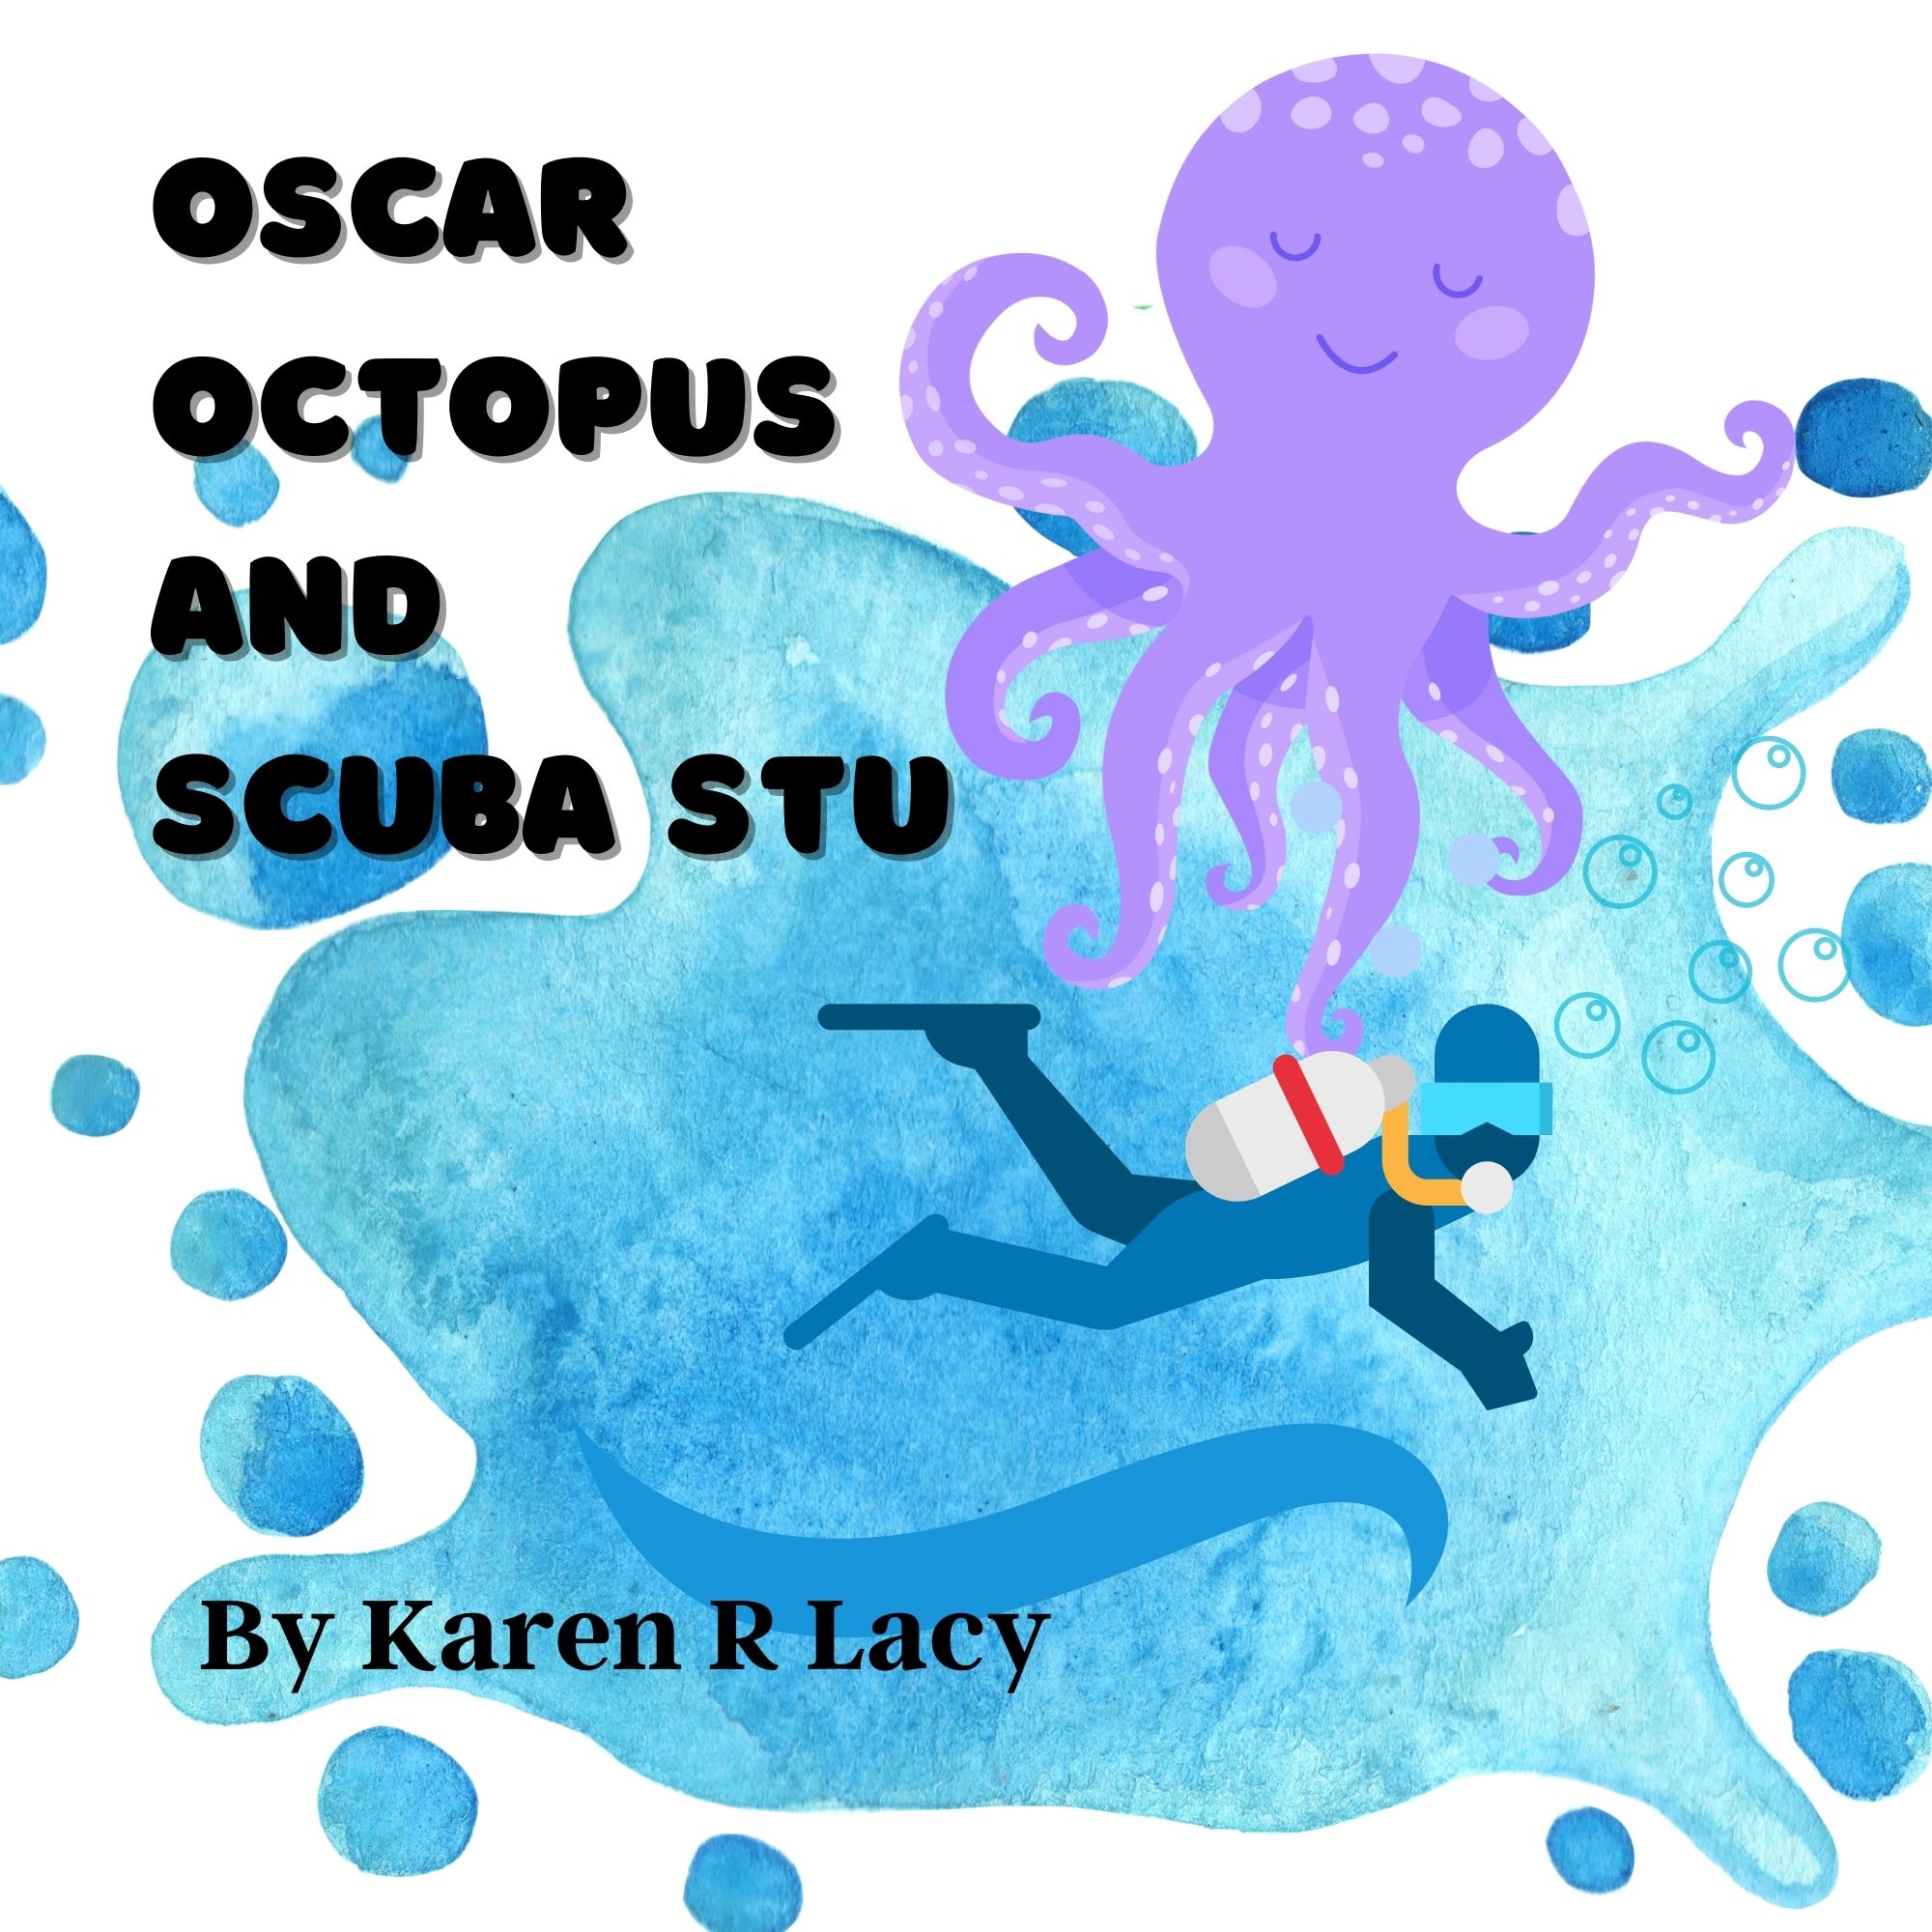 Oscar Octopus and Scuba Stu by Karen R Lacy